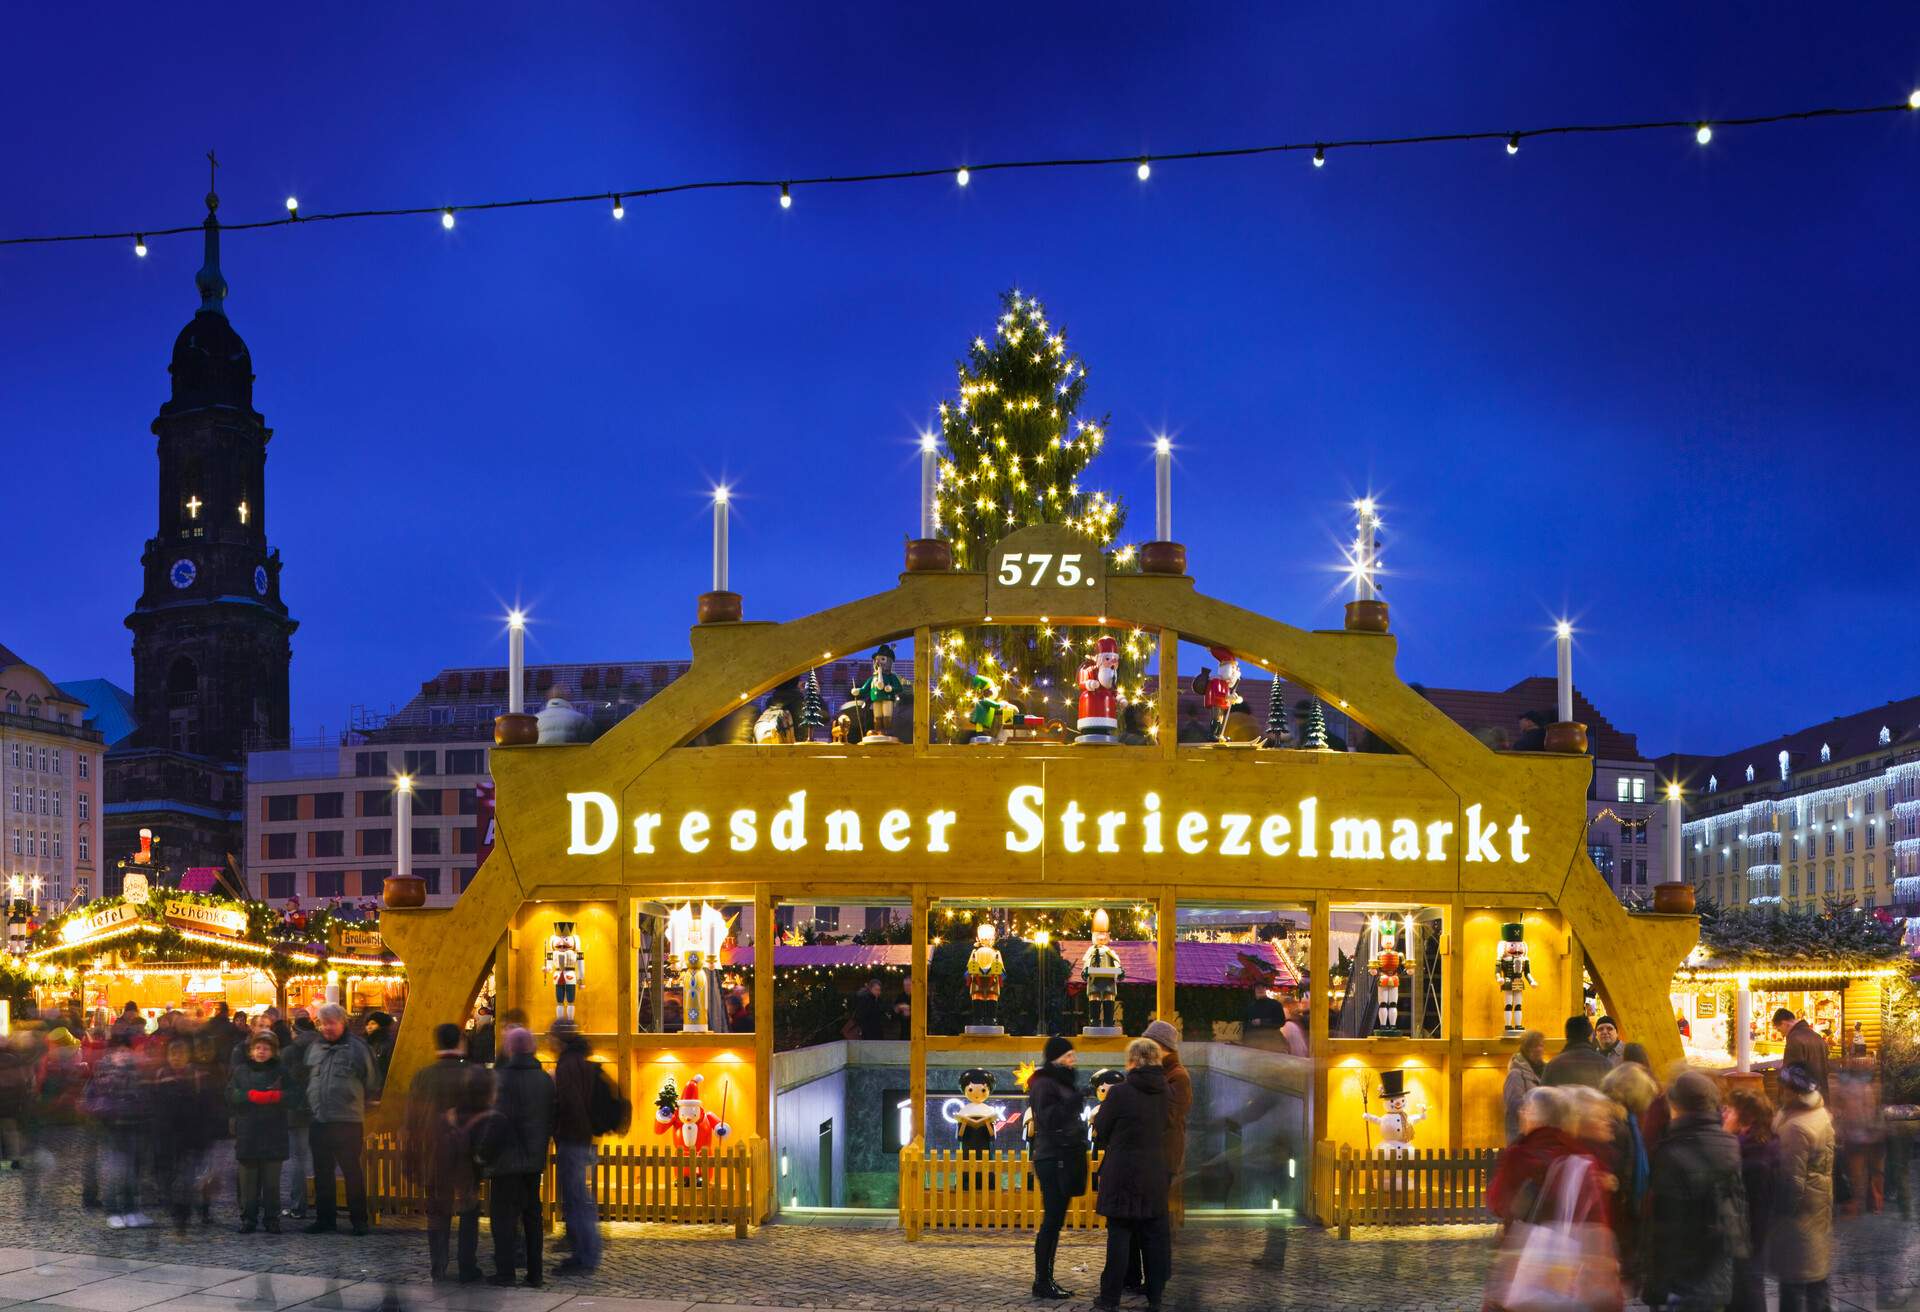 GERMANY_CHRISTMAS_MARKET_DRESDEN_STRIEZELMARKT